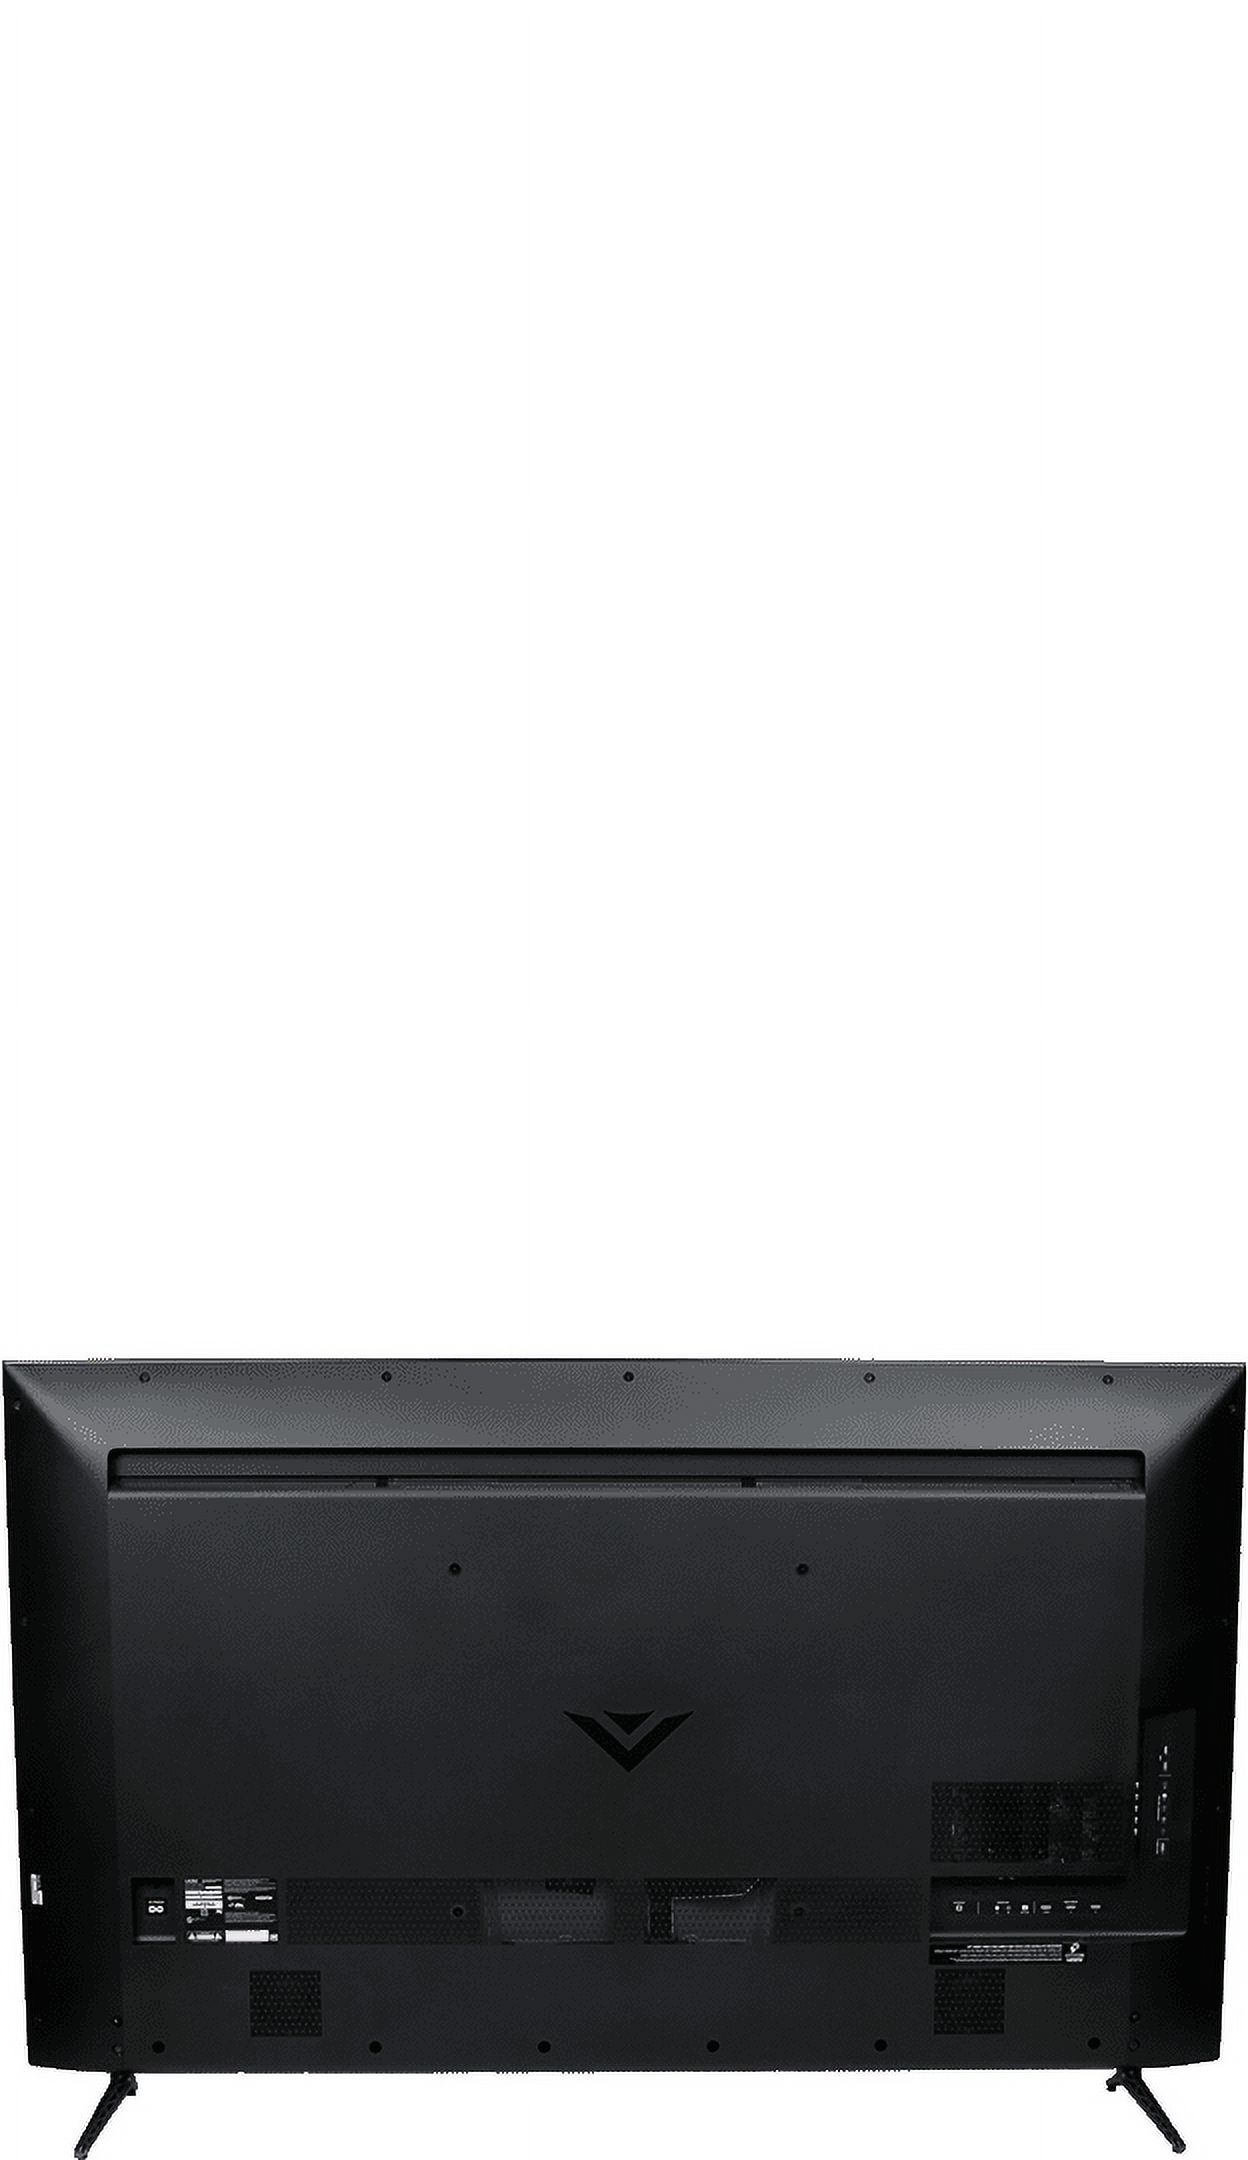 VIZIO SmartCast E-Series 65" Class (64.5" Diag.) Ultra HD 2160p 120Hz Full Array LED Smart Home Theater Display w/ Chromecast built-in (E65u-D3) - image 26 of 28